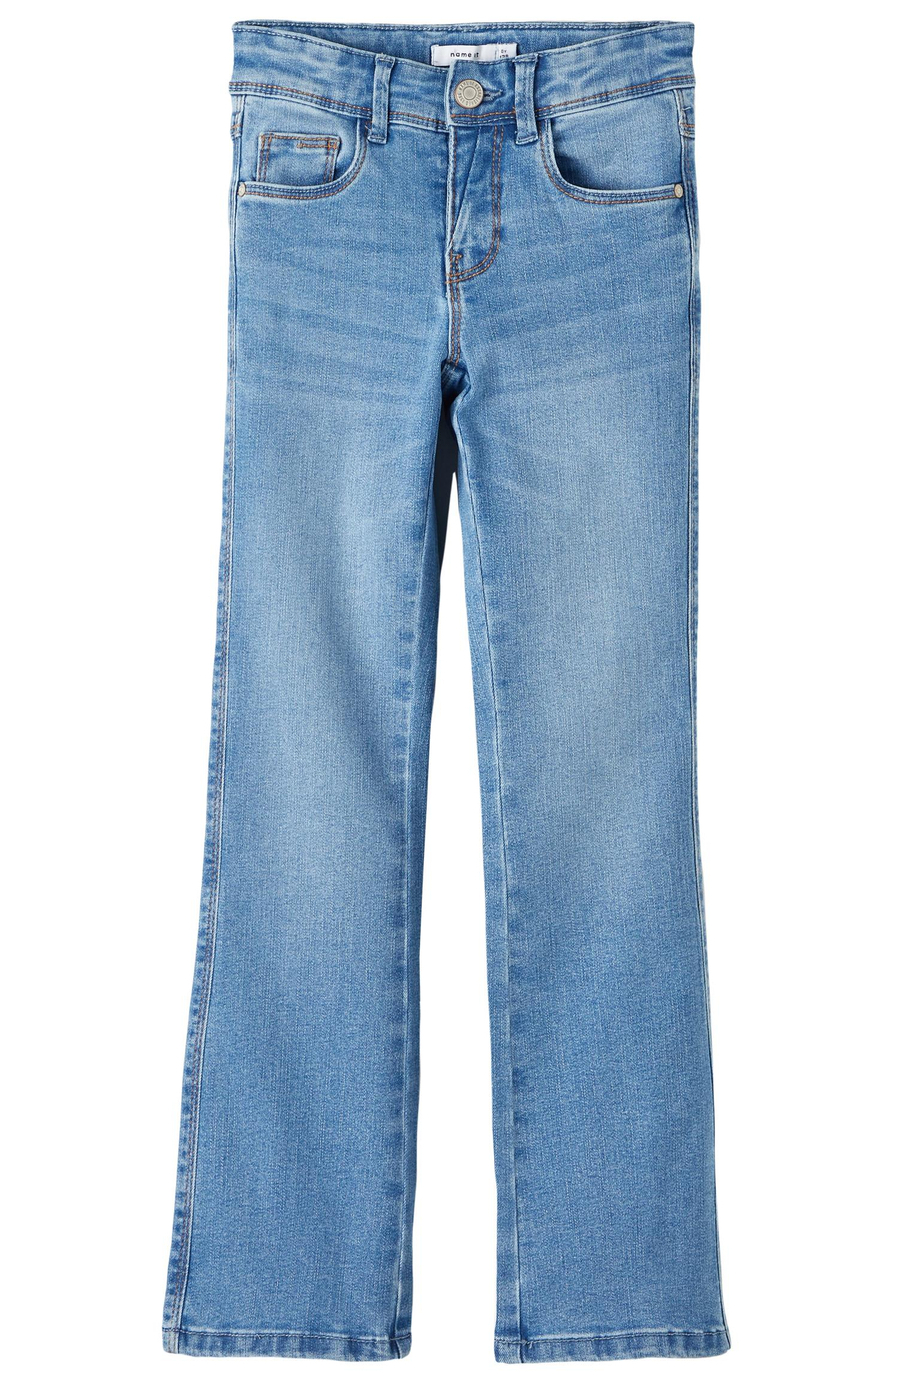 nkfpolly skinny boot jeans 1142-au 13208876 name it denim jeans medium blue